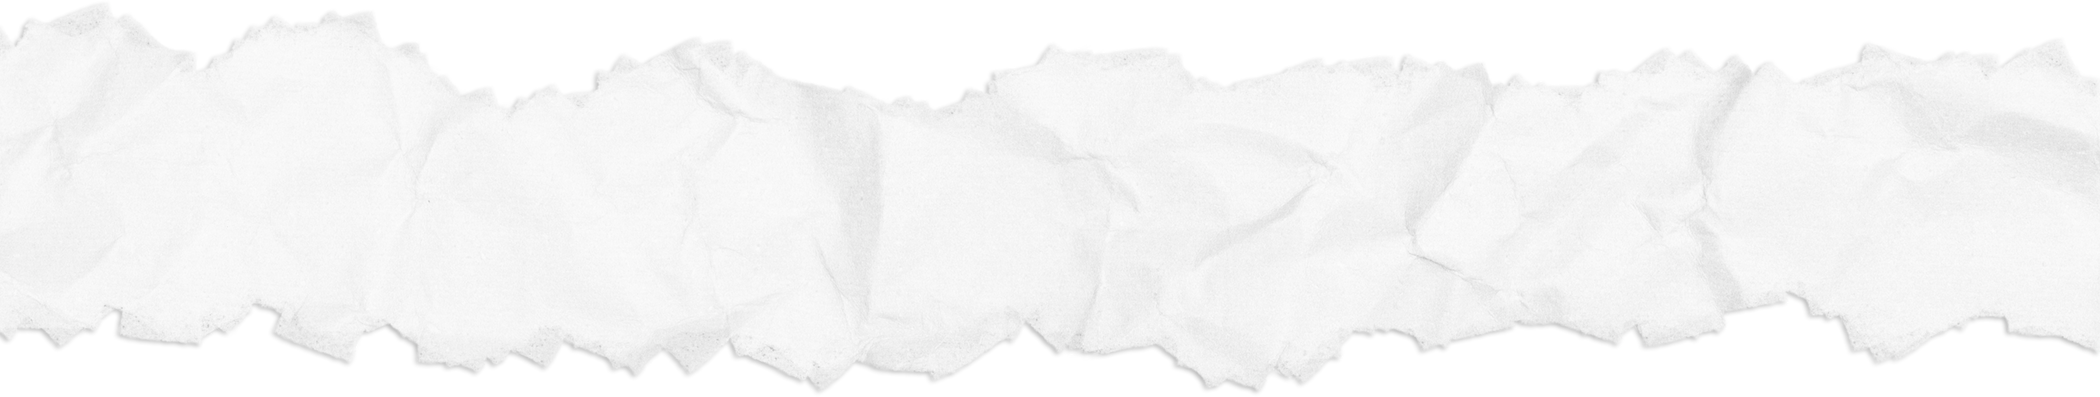 Crumpled Torn White Paper